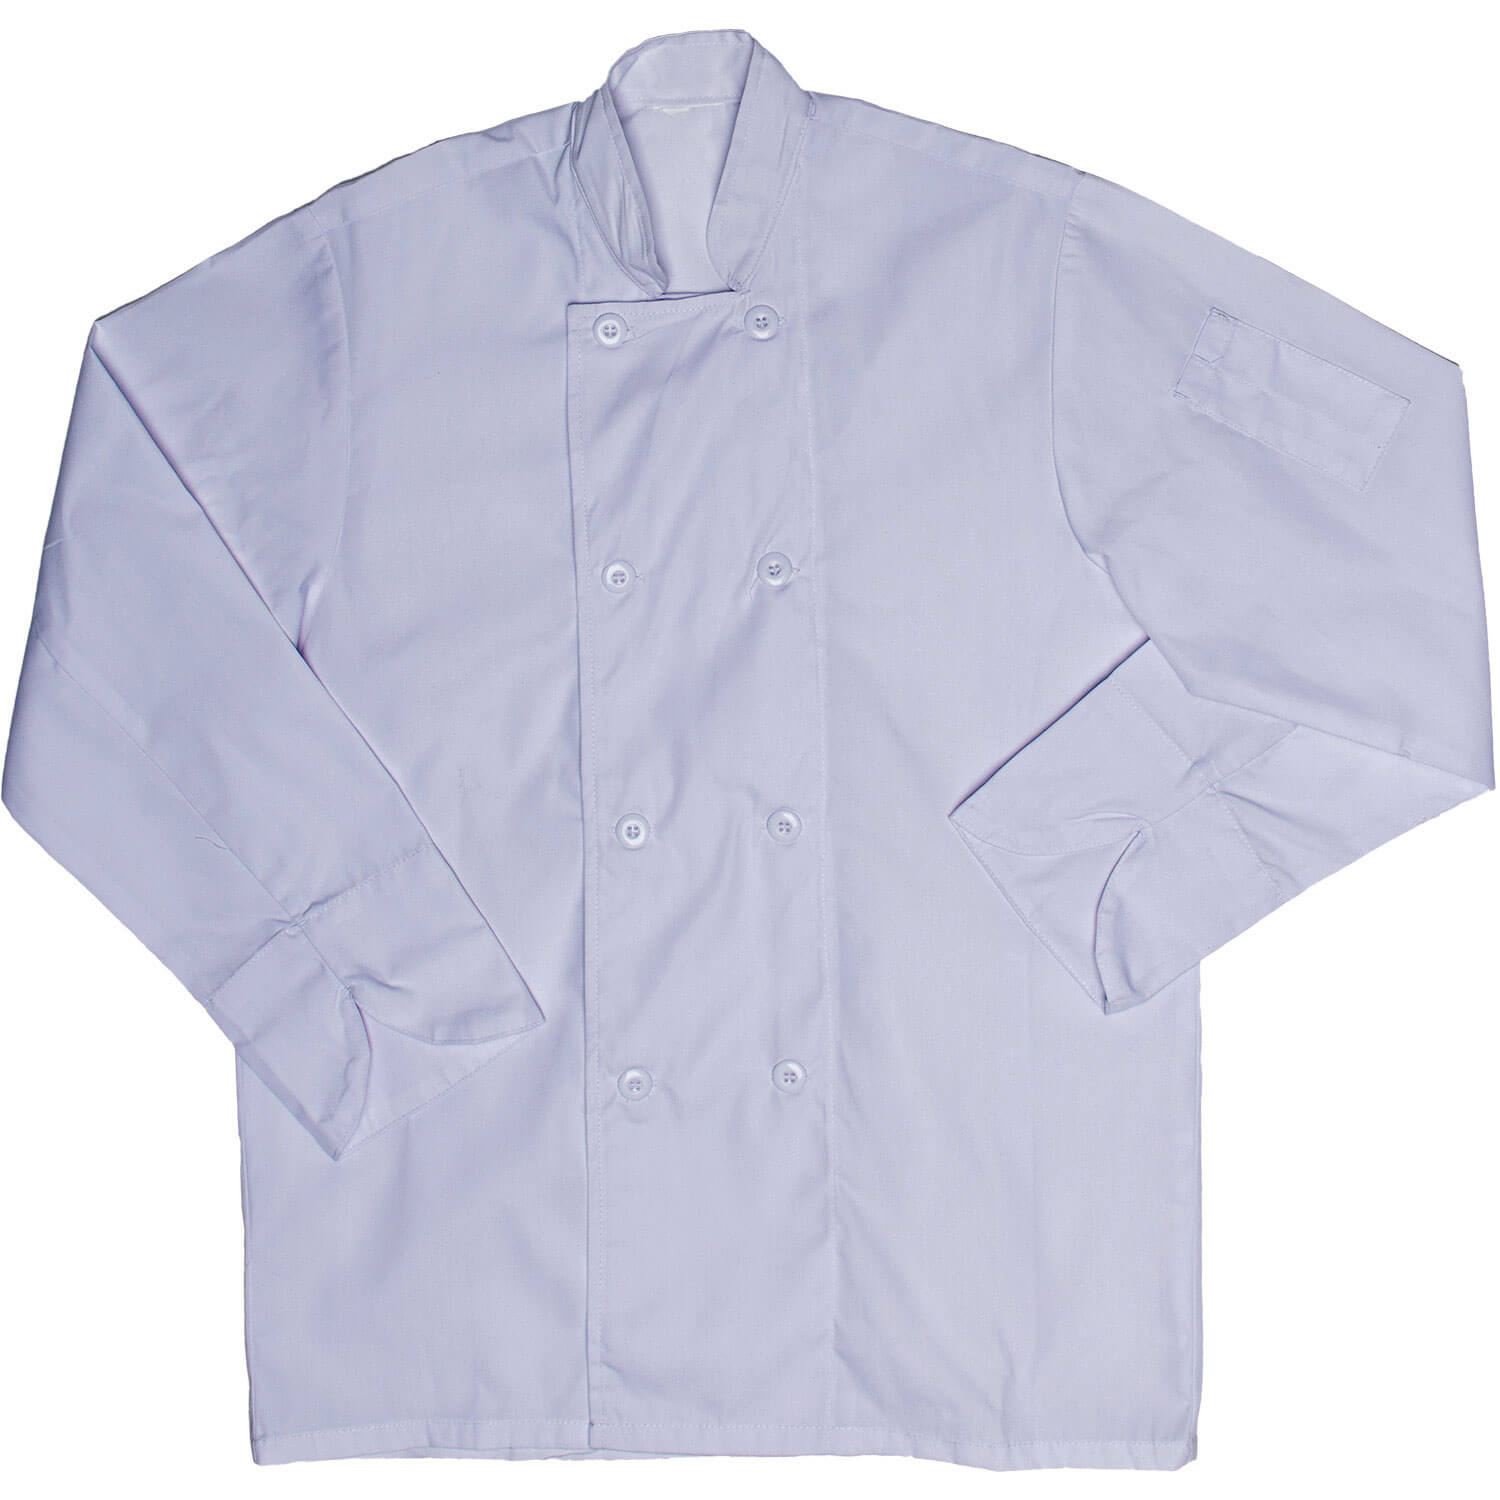 javlin long sleeve chef jacket 3007 WH PC